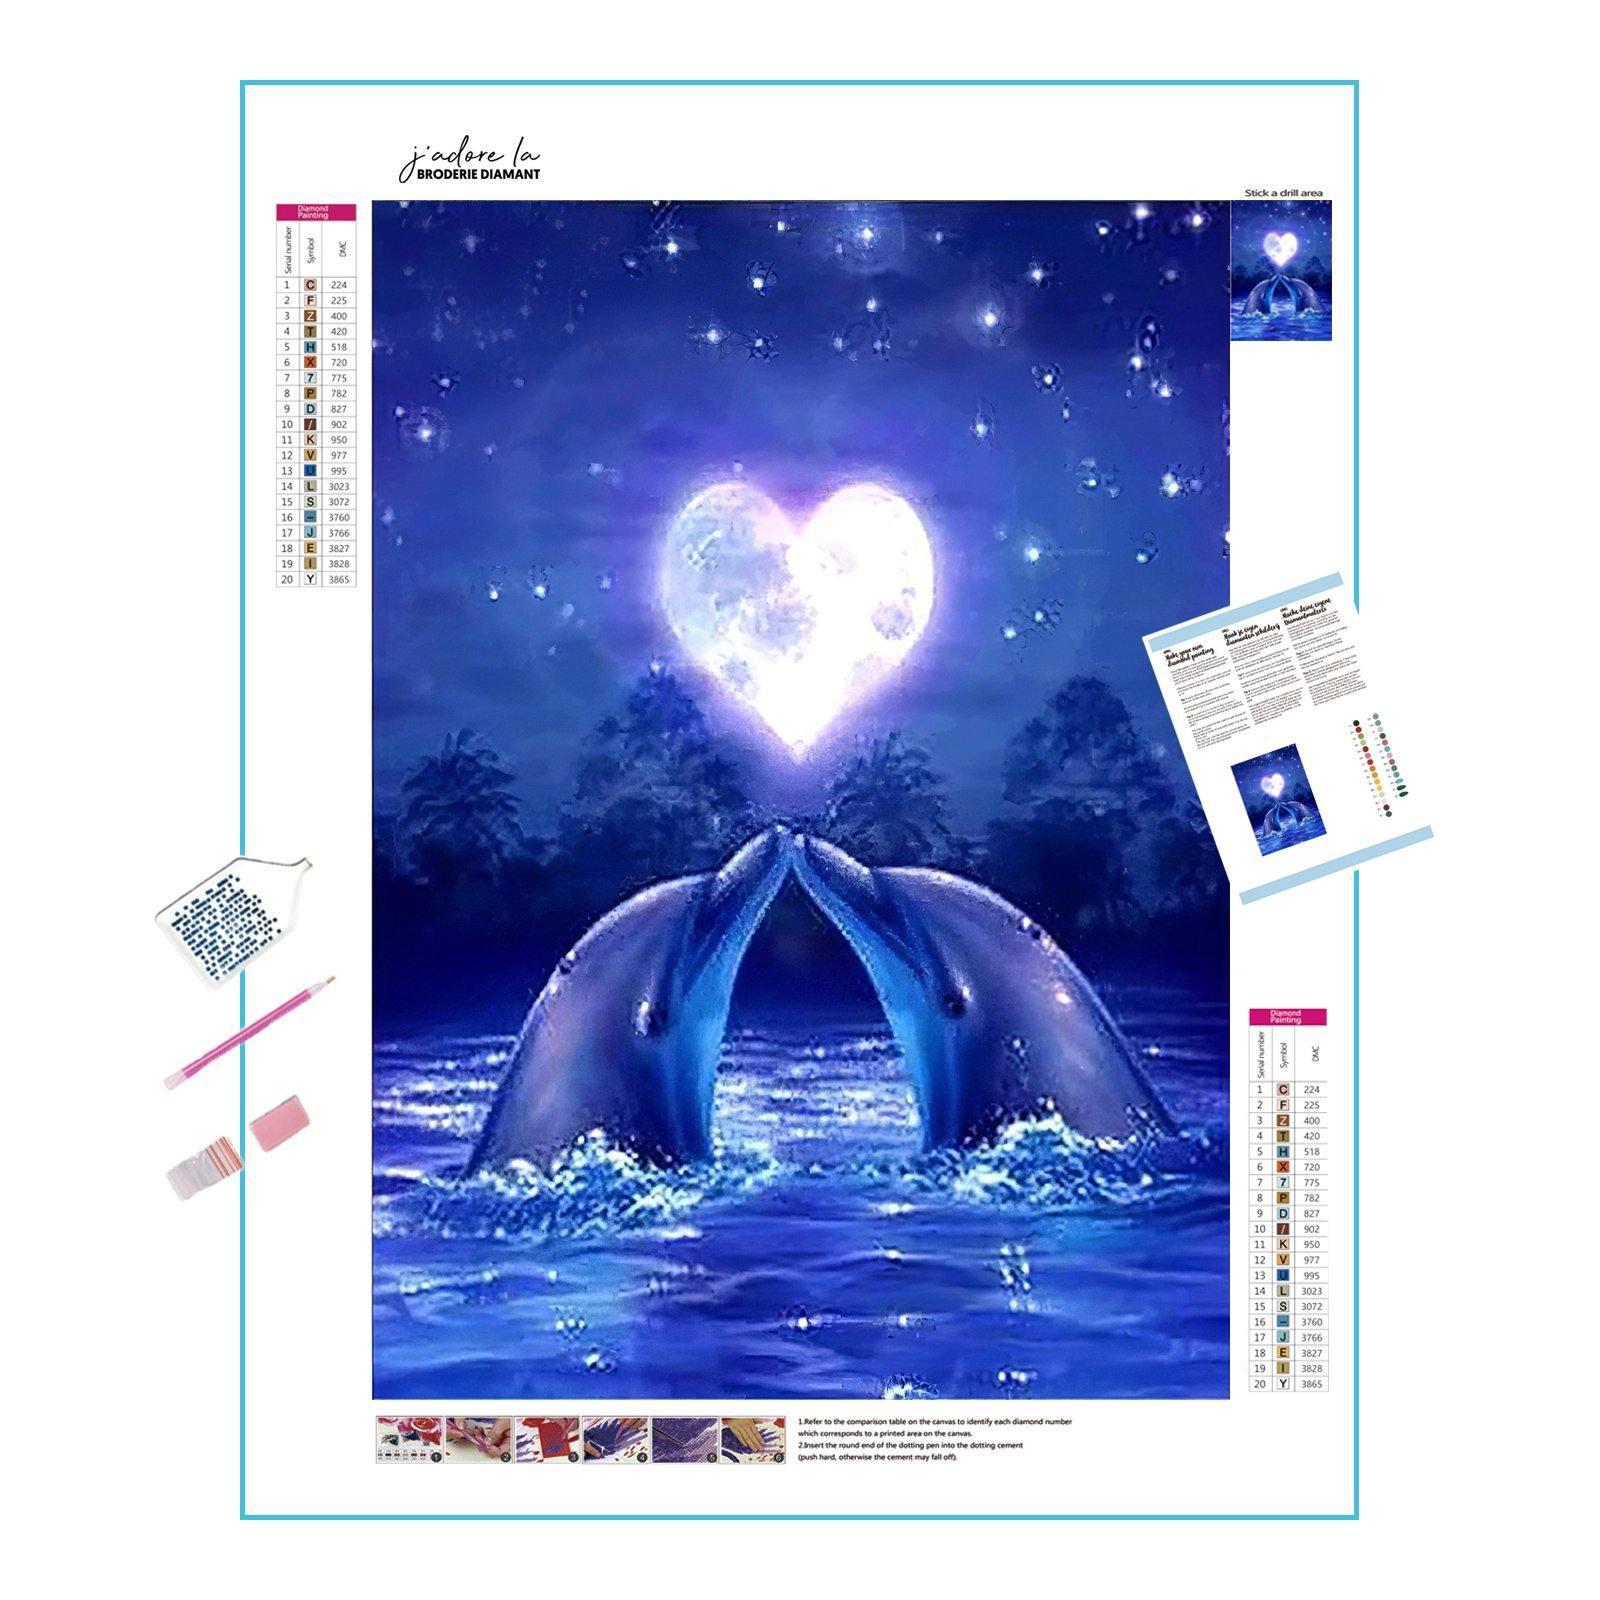 Celebrate ocean romance with Dolphin In Love art.Dolphin In Love - Diamondartlove